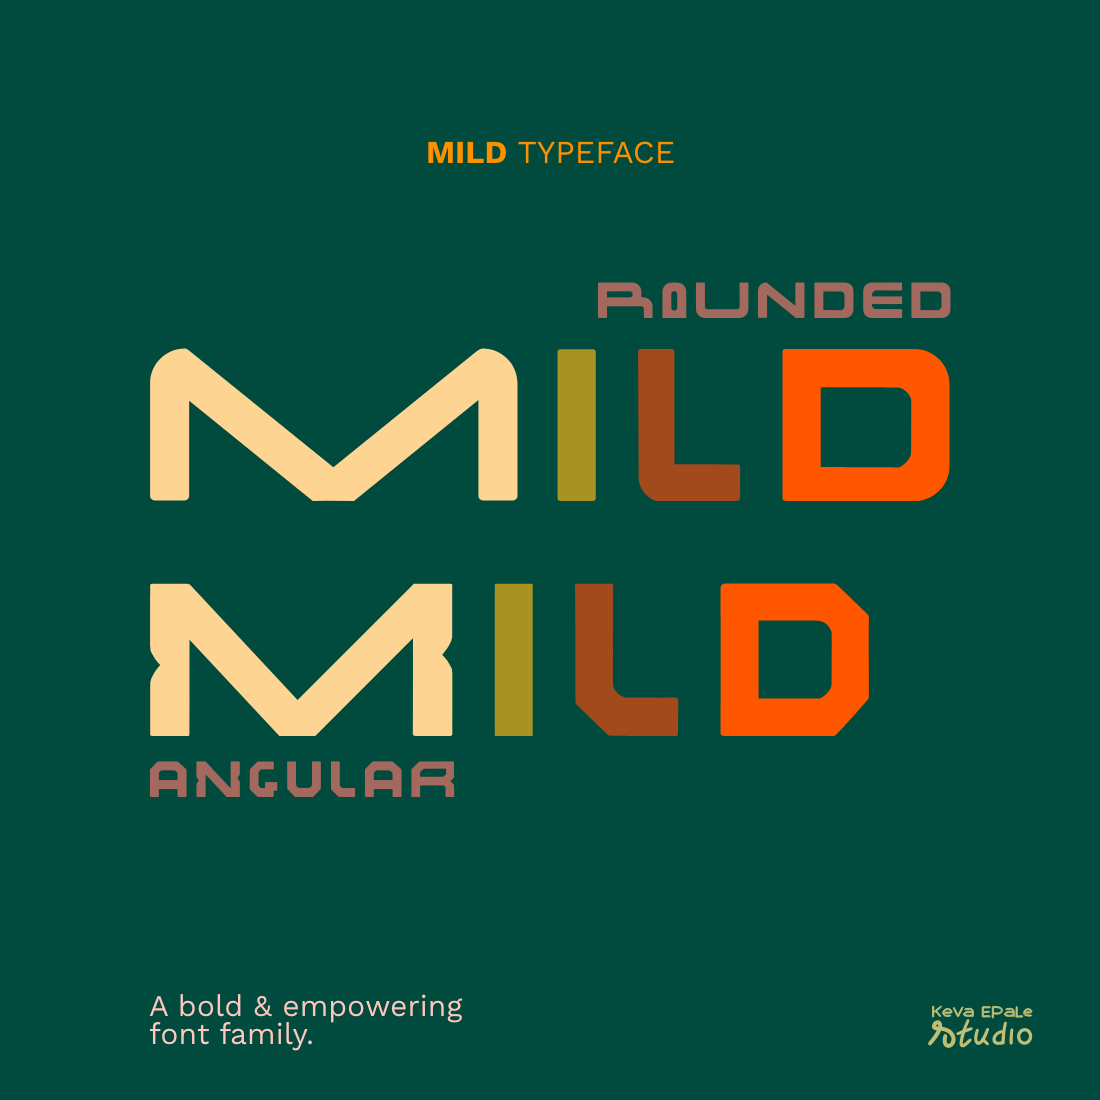 Mild Typeface Rounded Angular cover image.